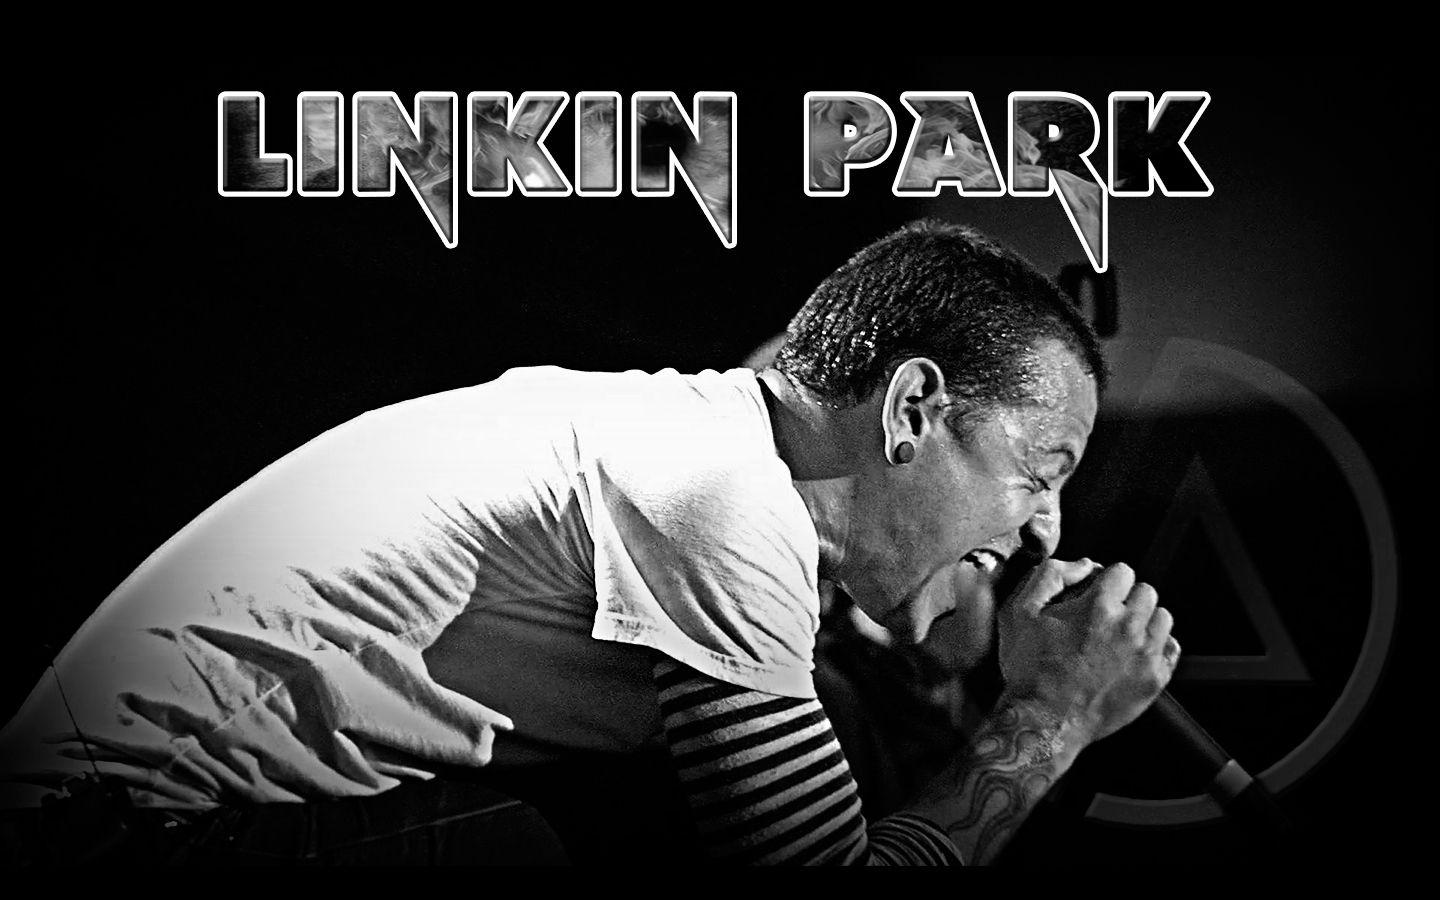 Linkin Park Wallpaper (Chester Bennington) by Irkides on DeviantArt